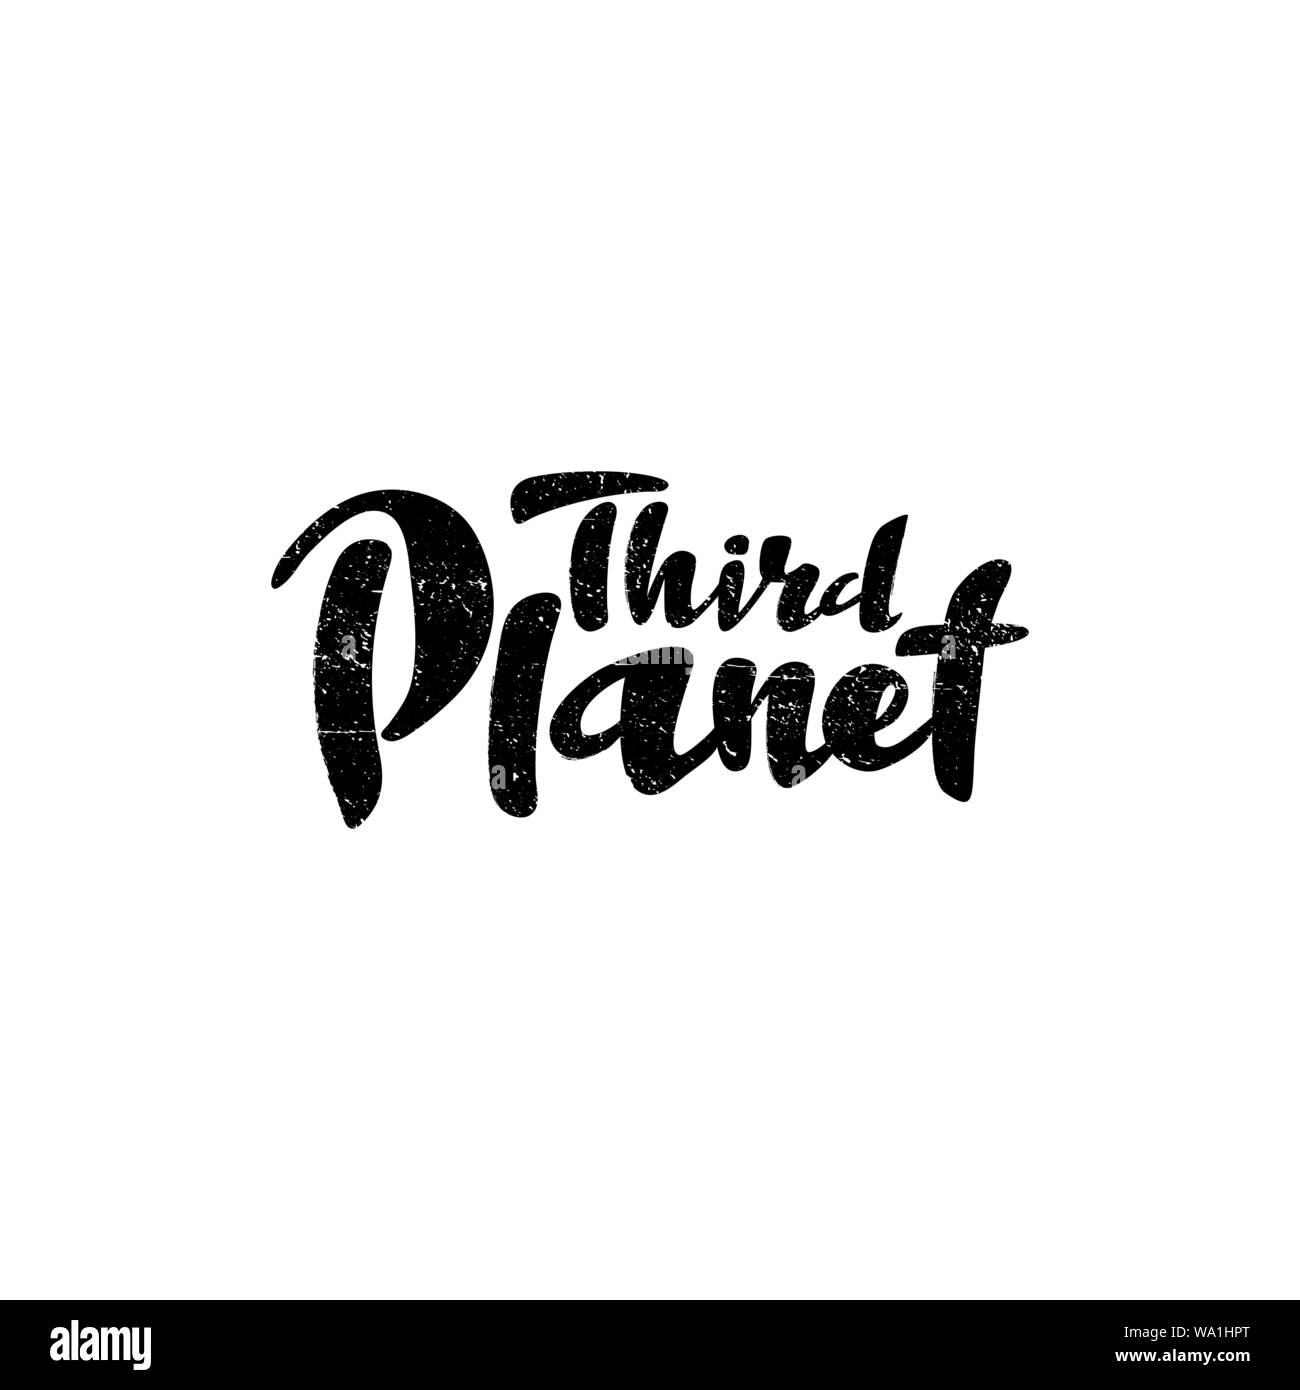 Sudadera negra capucha logotipo planeta